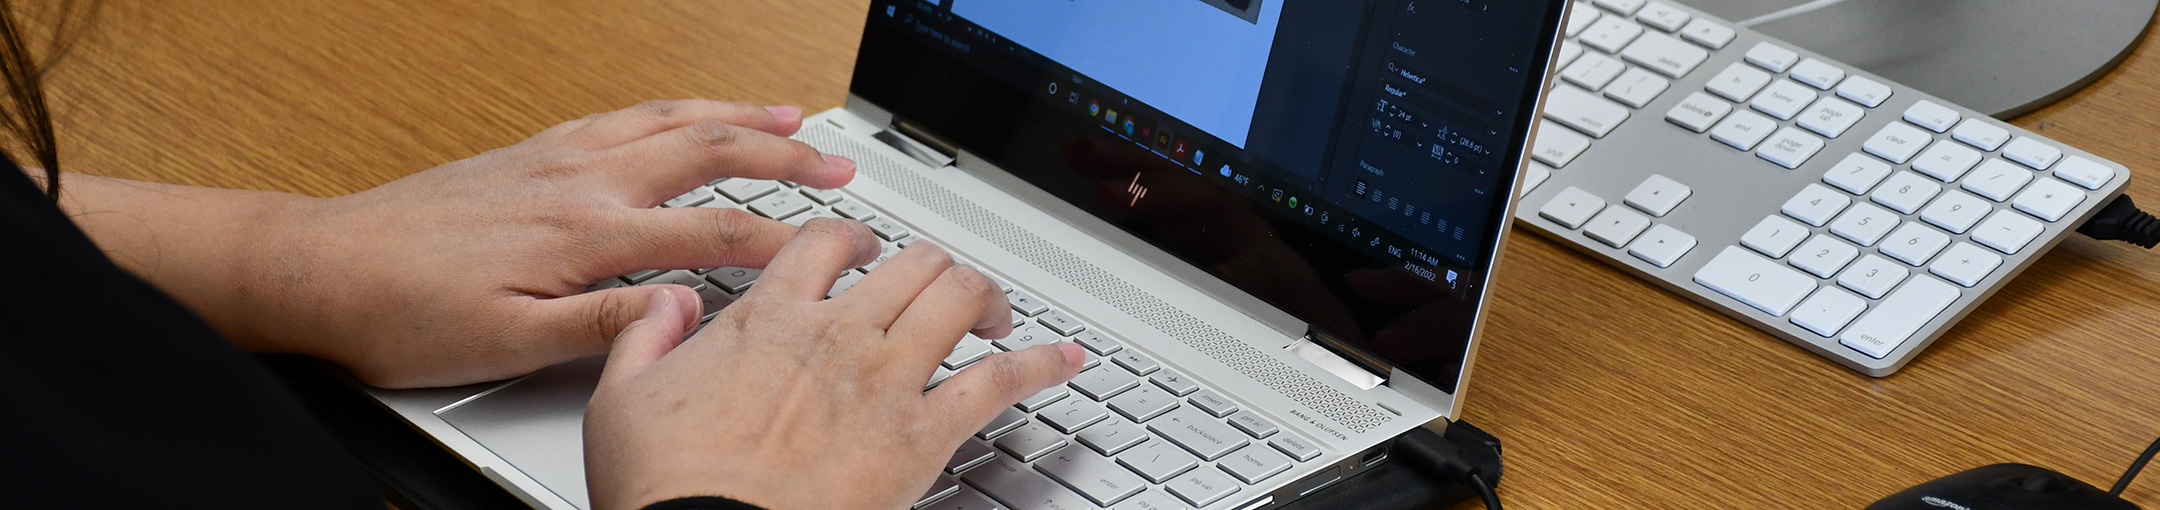 hands using a laptop computer.